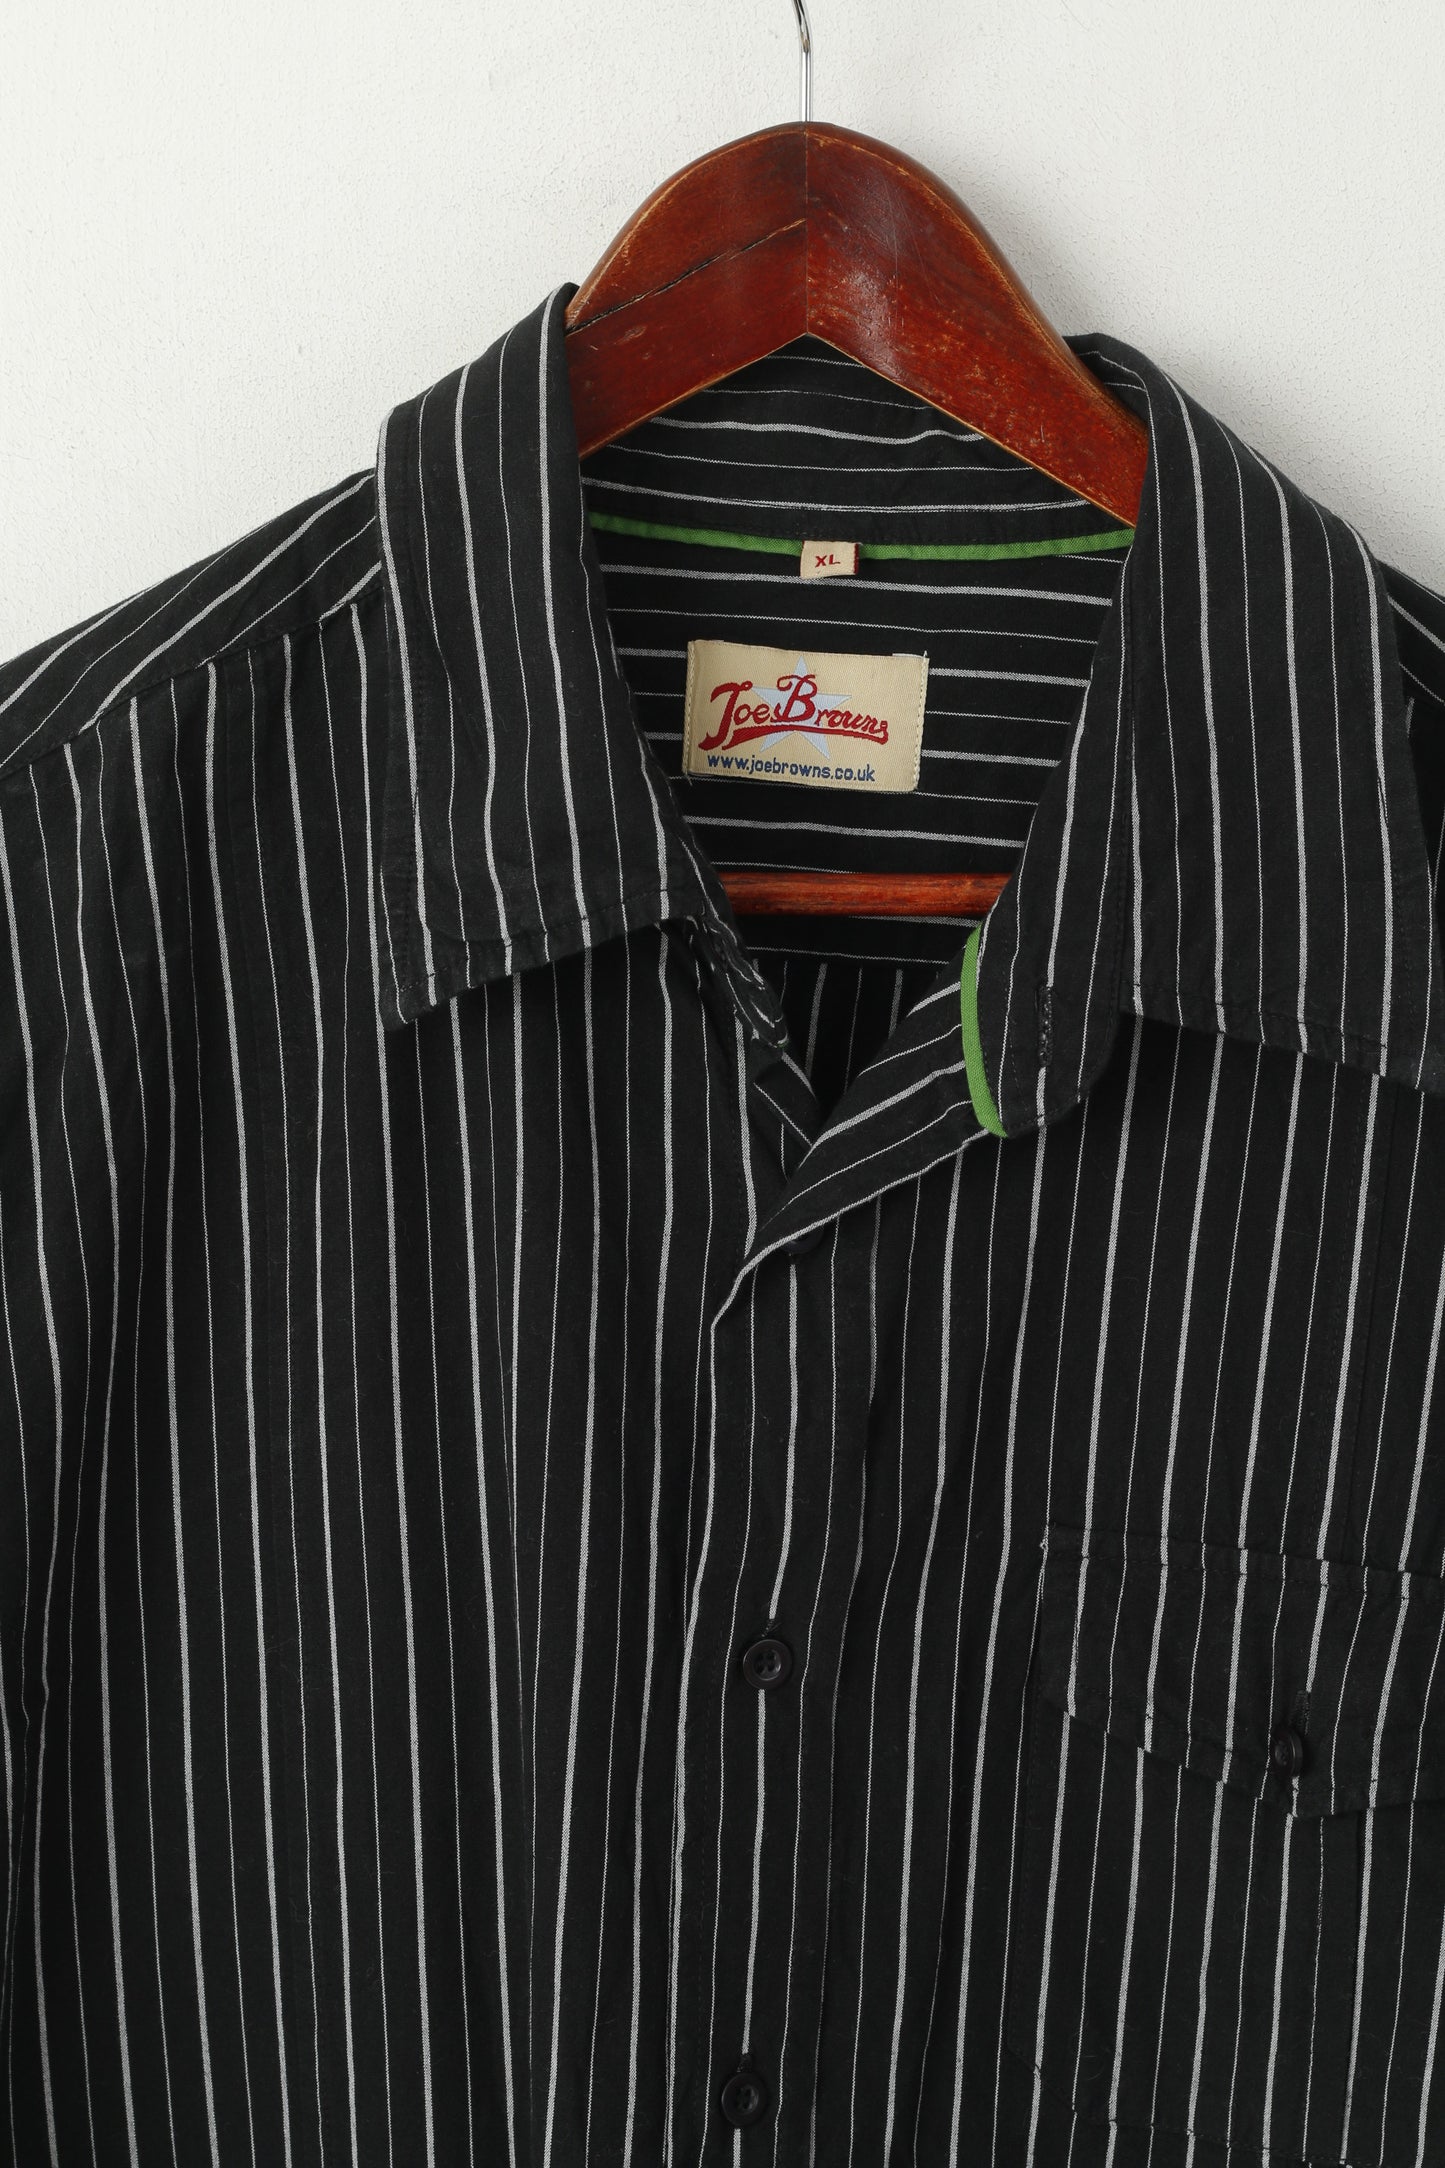 Joe Browns Men XL Casual Shirt Black Cotton Striped Embroidered Pocket Top